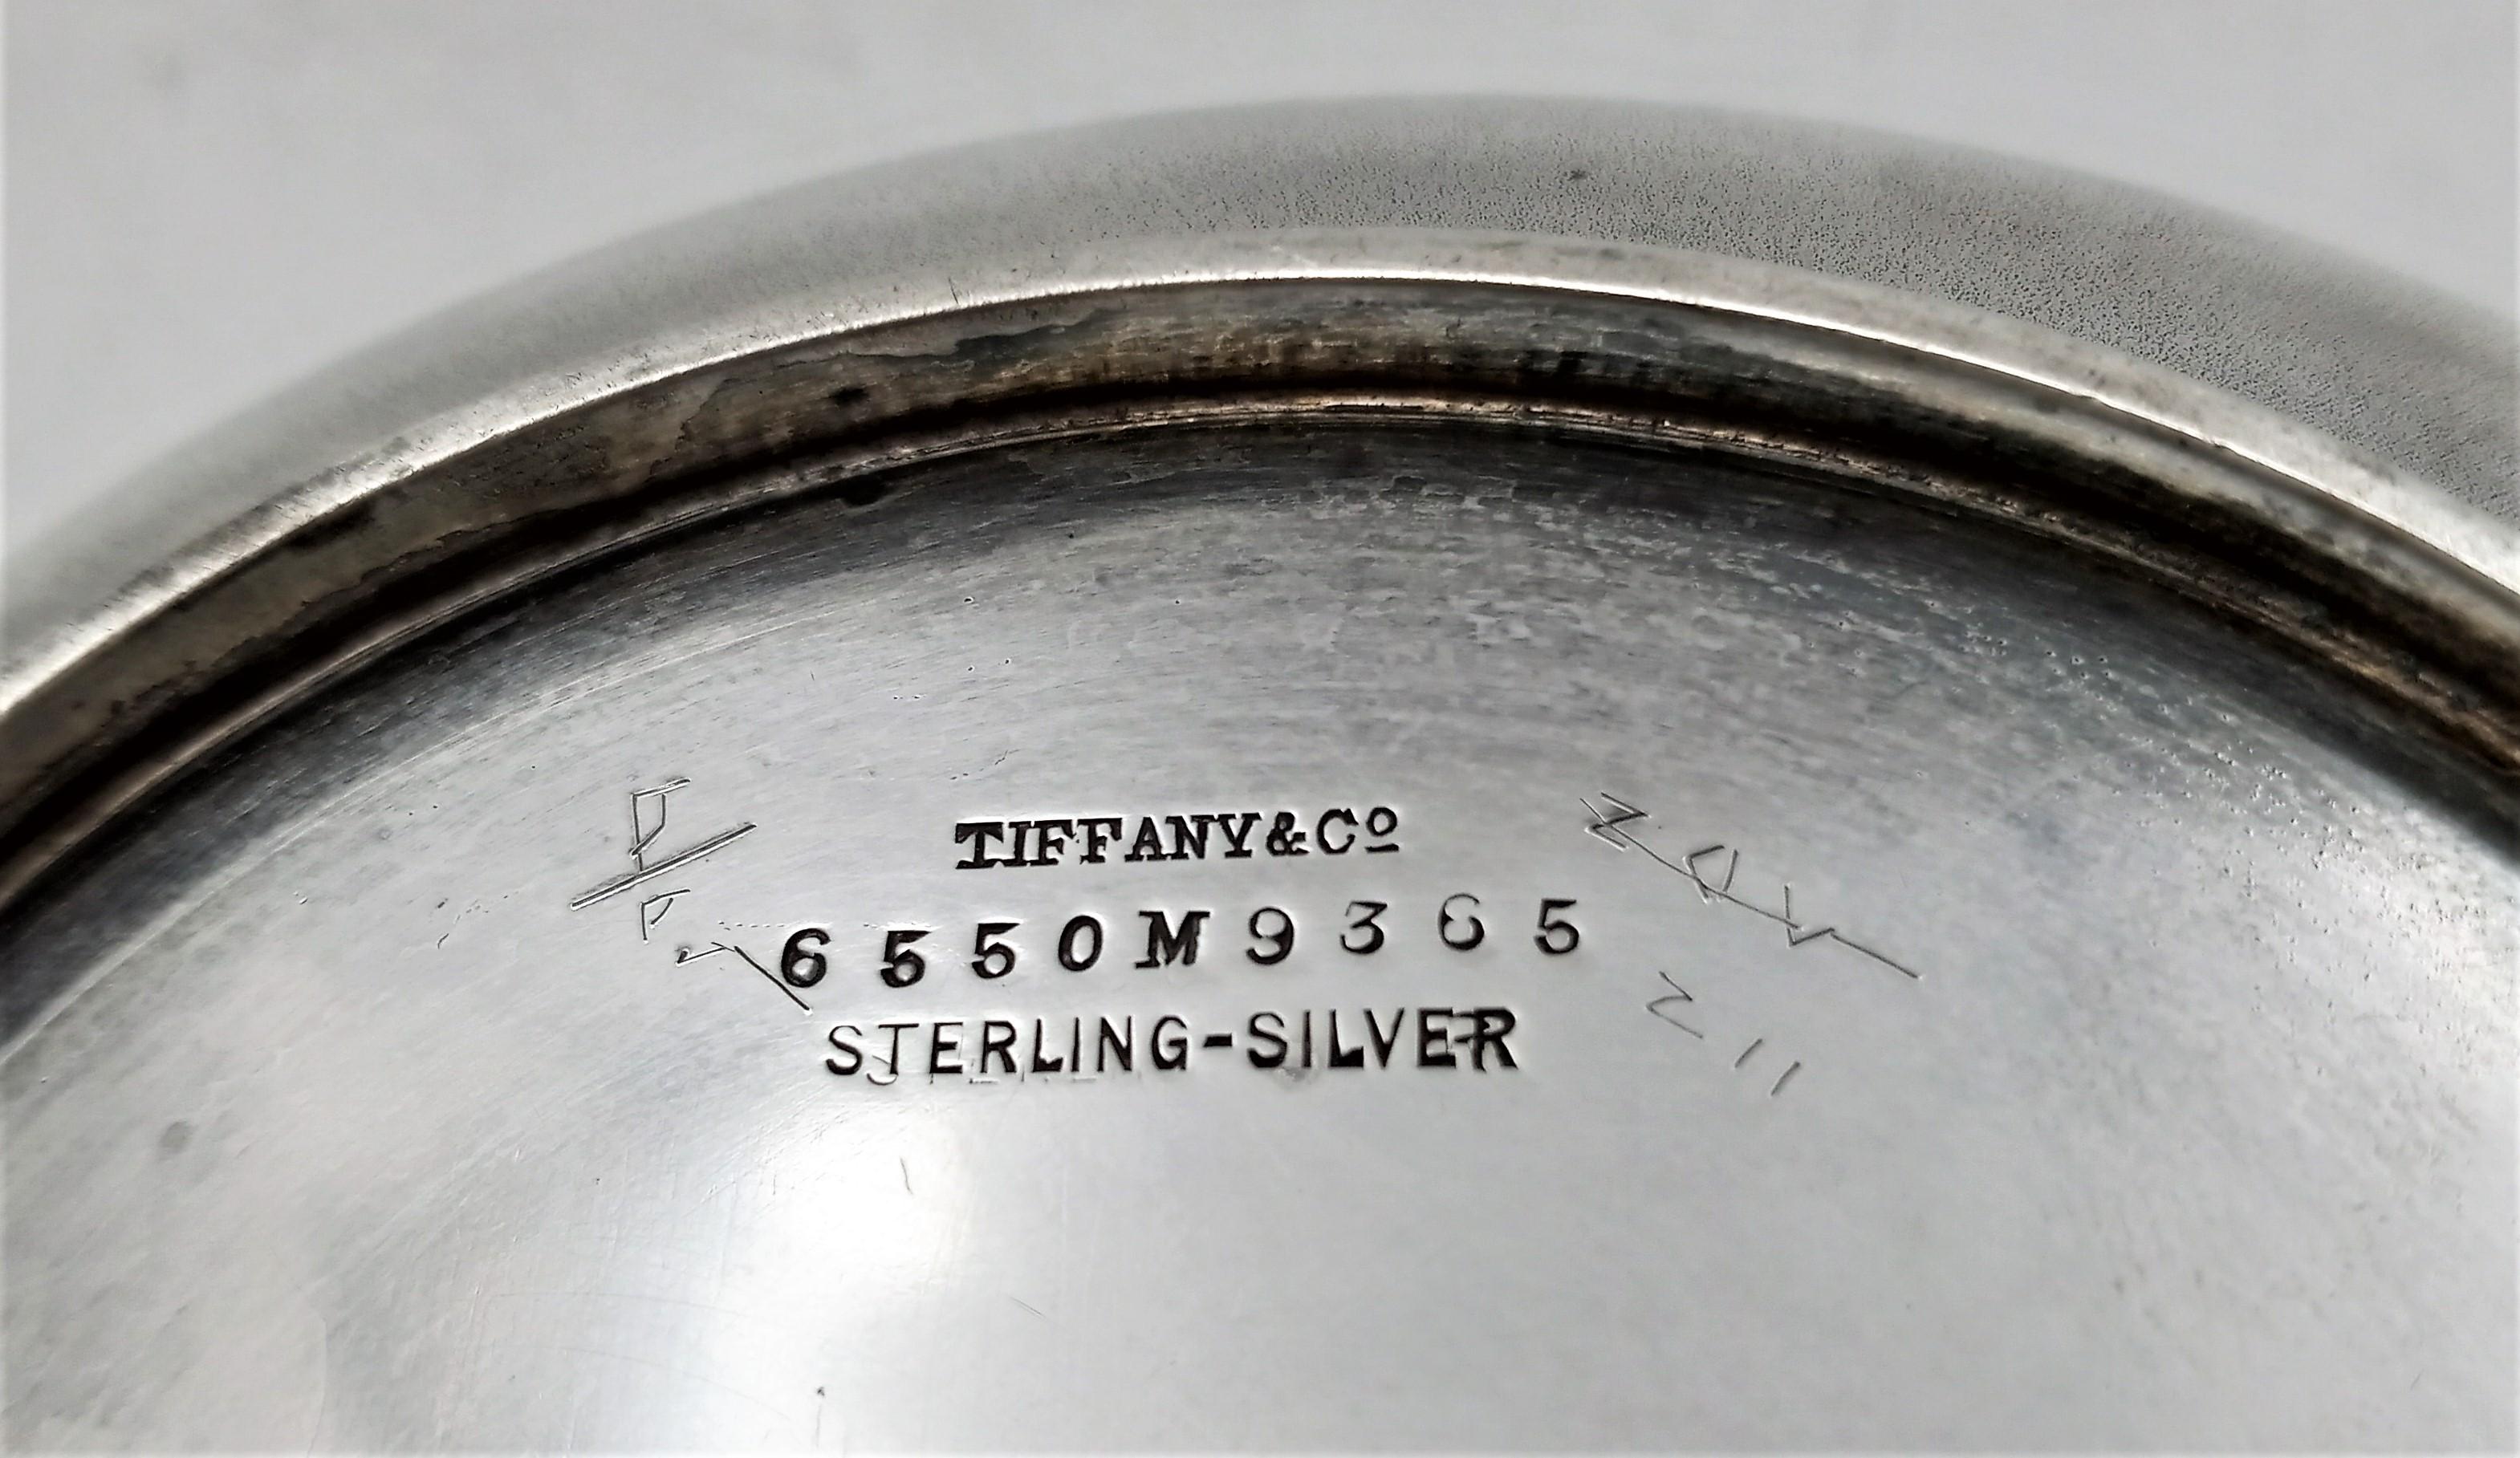 Tiffany & Co. Aesthetic Sterling Silver Porringer Dish, circa 1880s Serveware For Sale 2